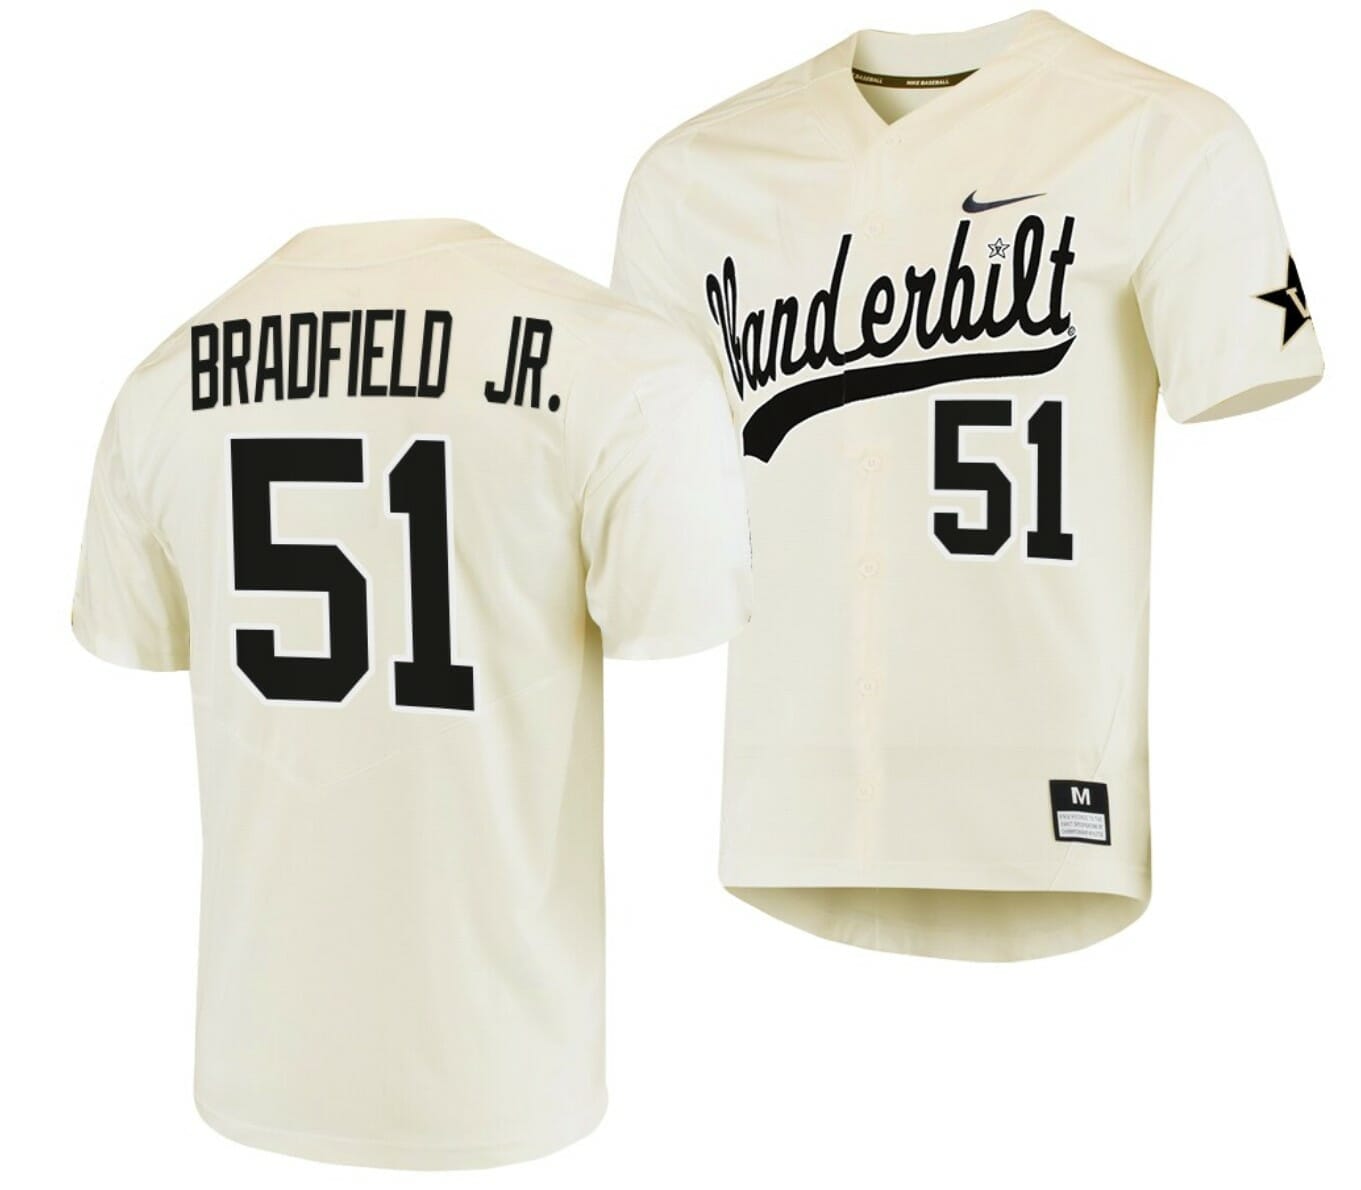 Hot] New Enrique Bradfield Jr Jersey Vanderbilt Cream #12